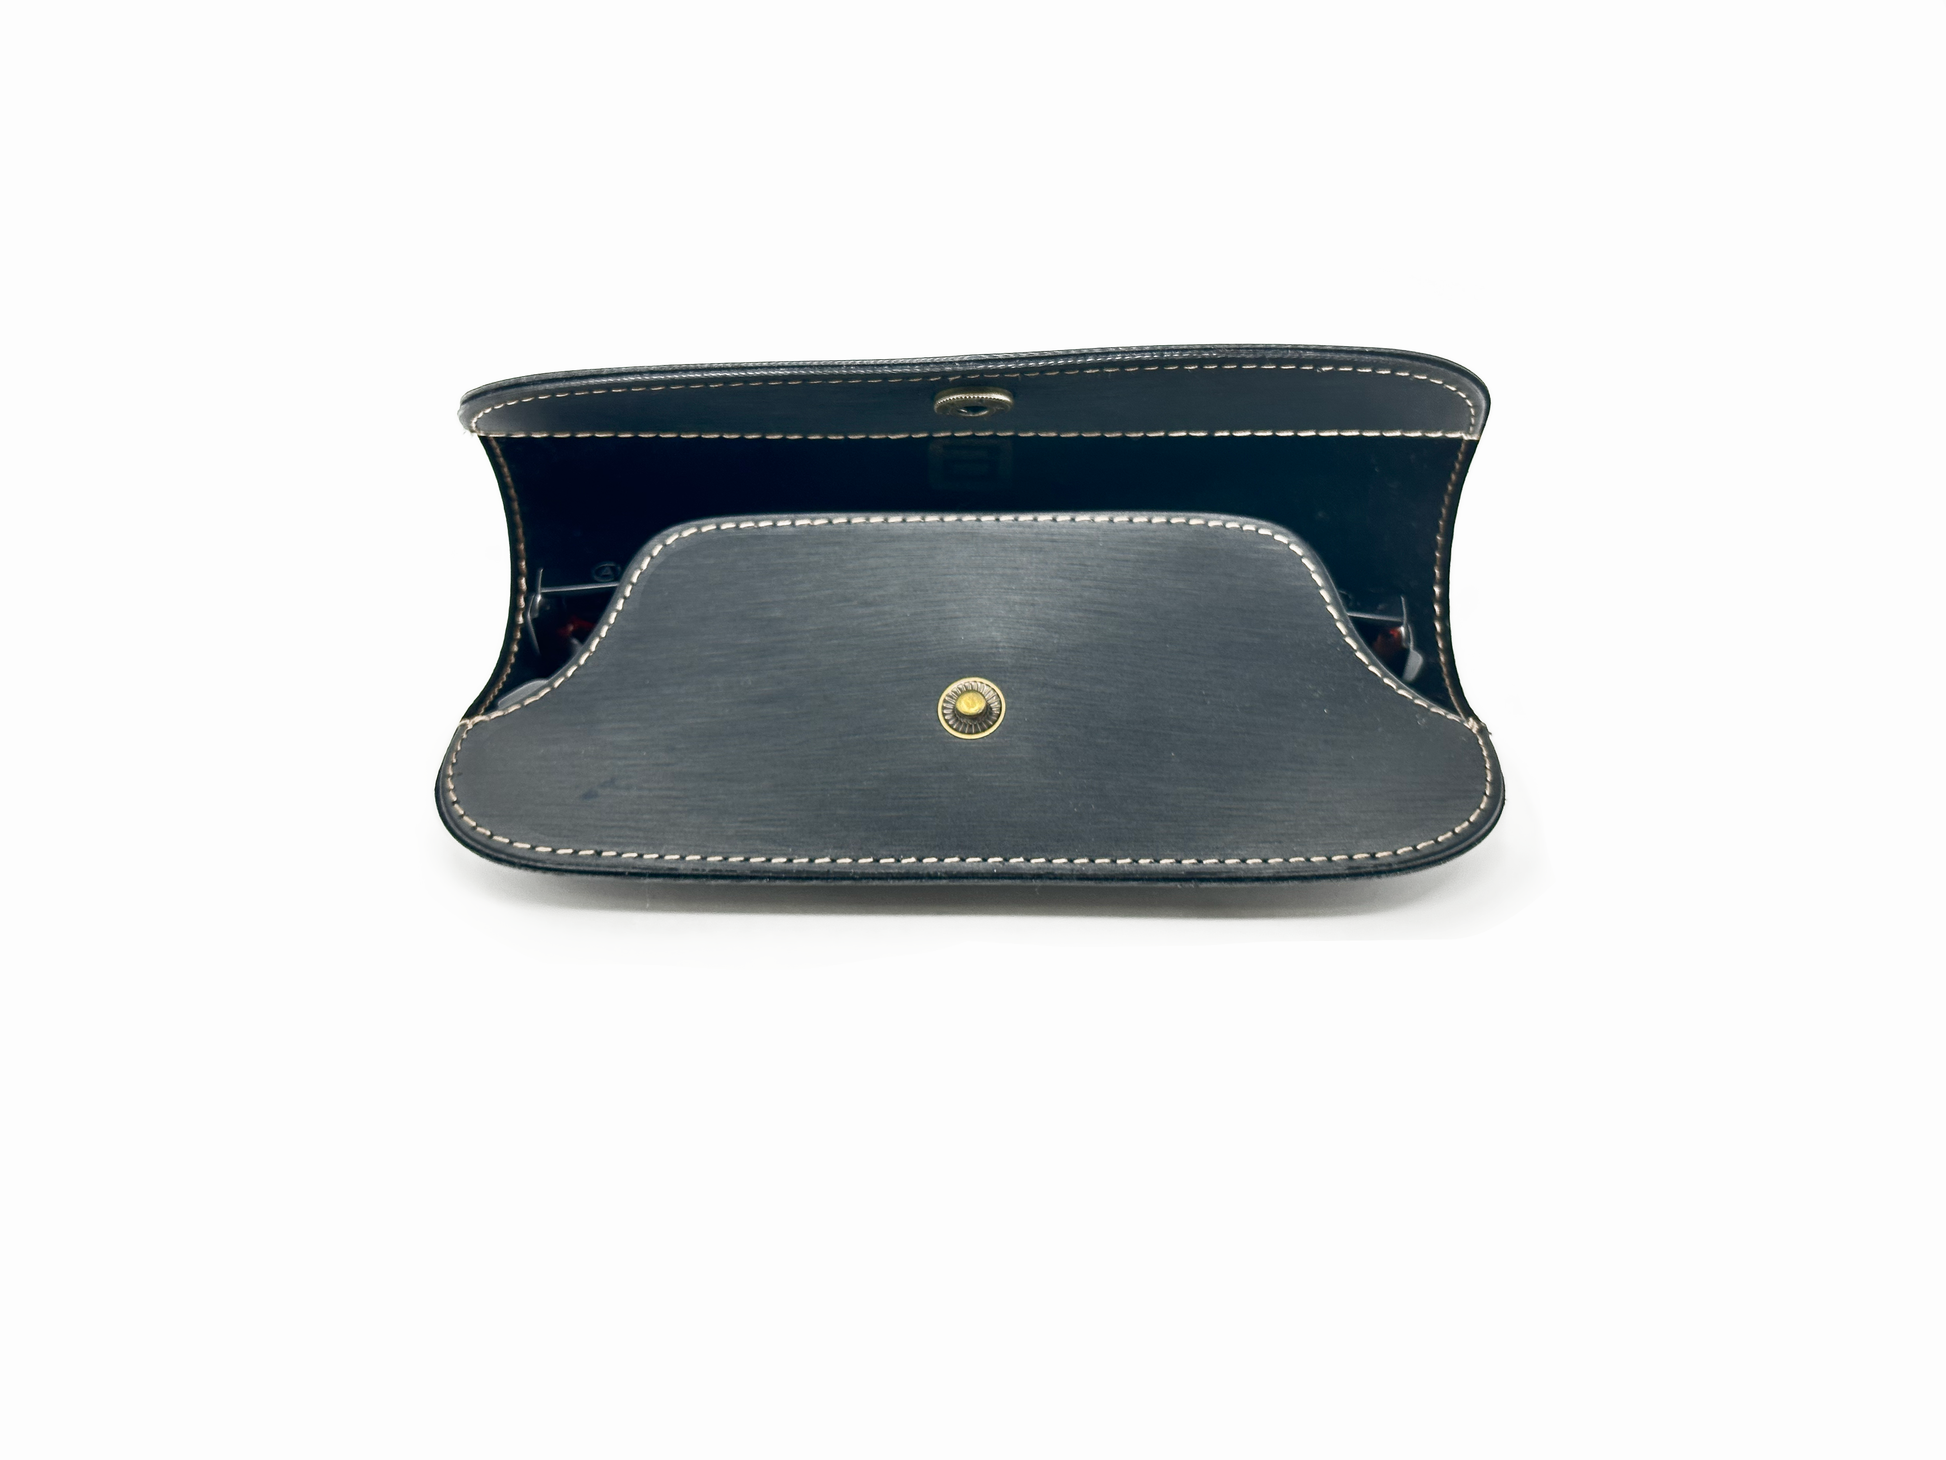 Open black leather snap case